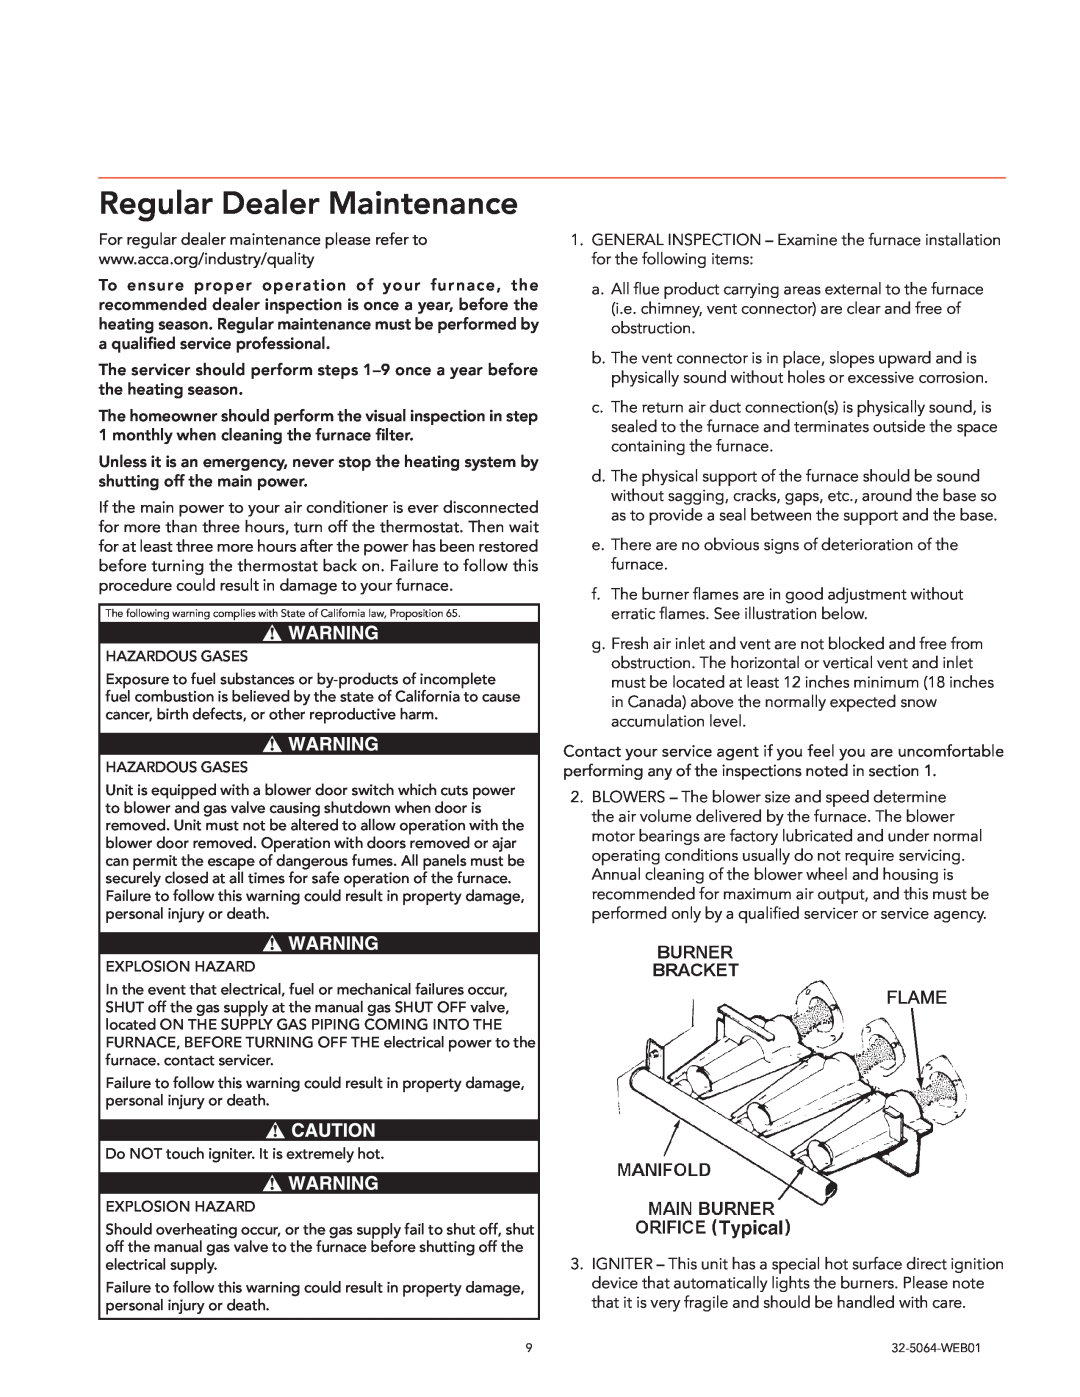 Trane Air Handlers Gas Furnaces, 32-5064-WEB01 manual Regular Dealer Maintenance, Flame 